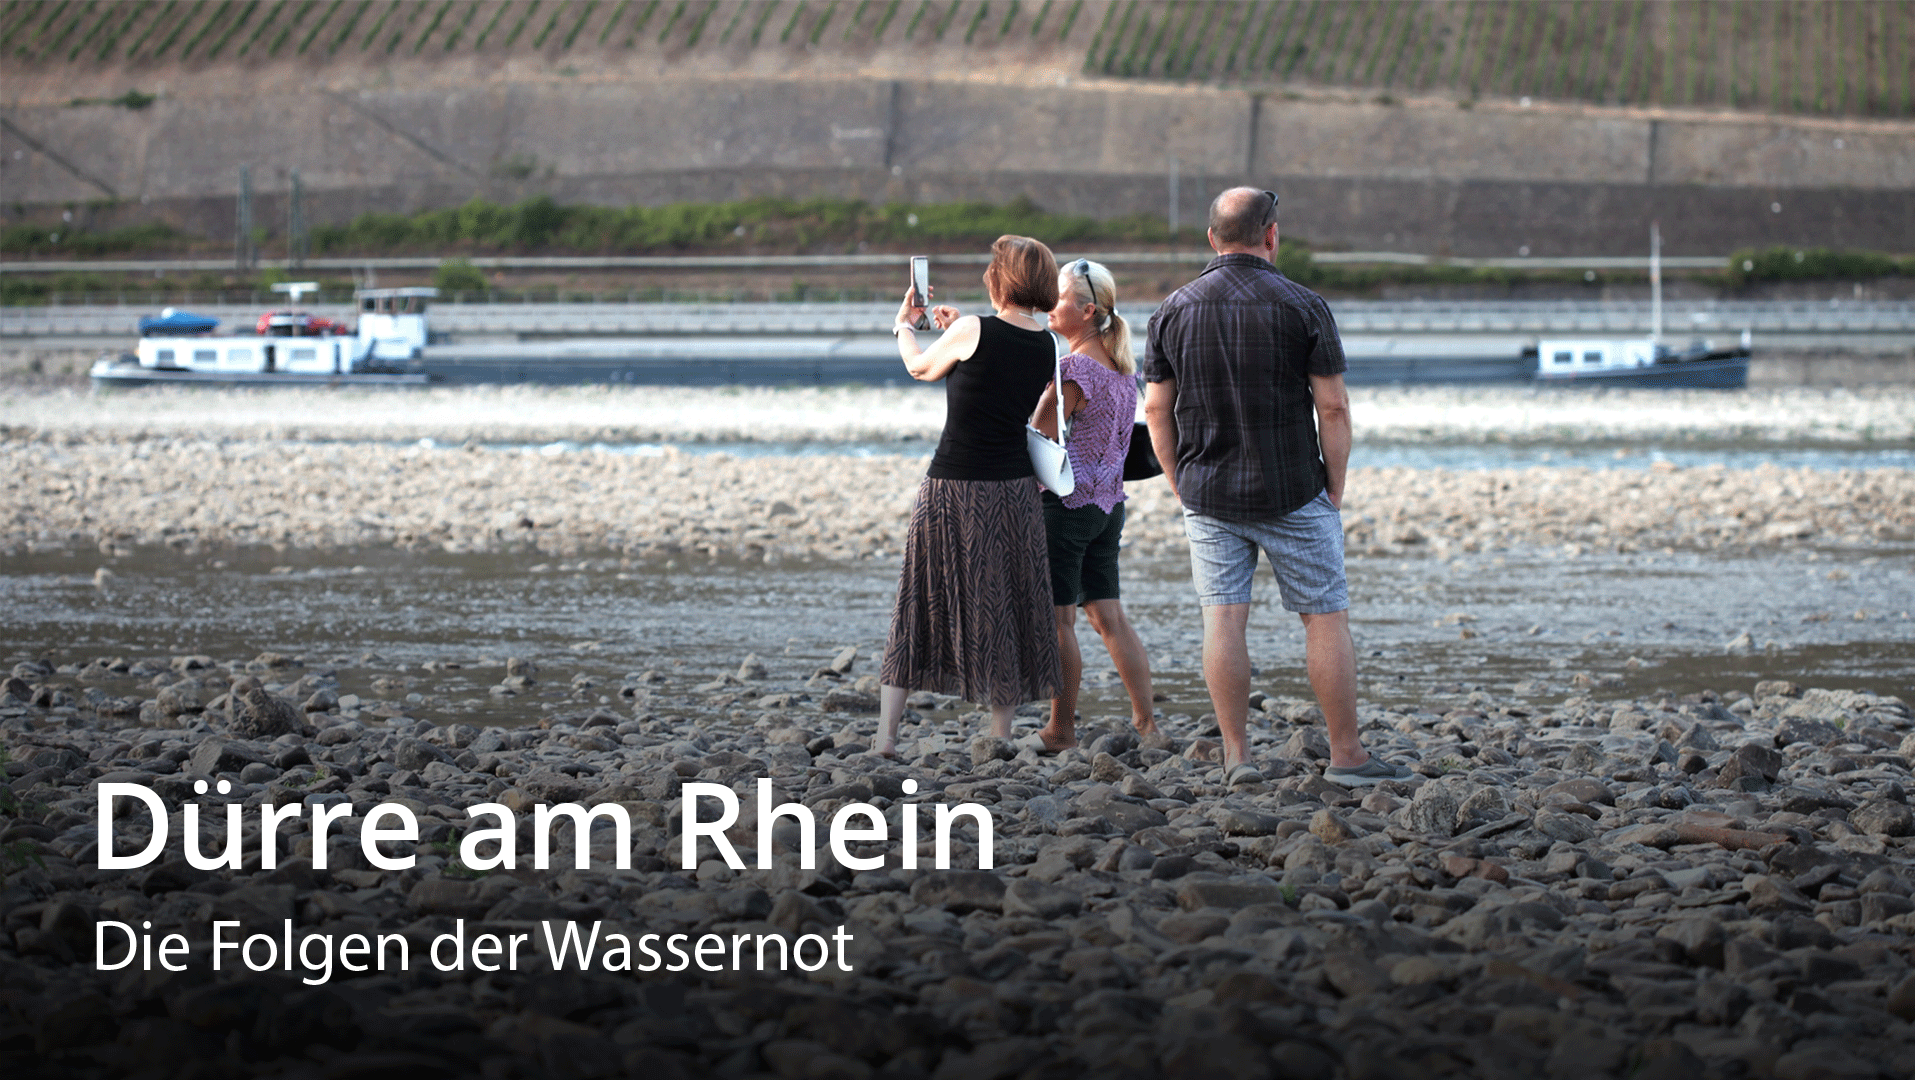 Drought hits Rhine river